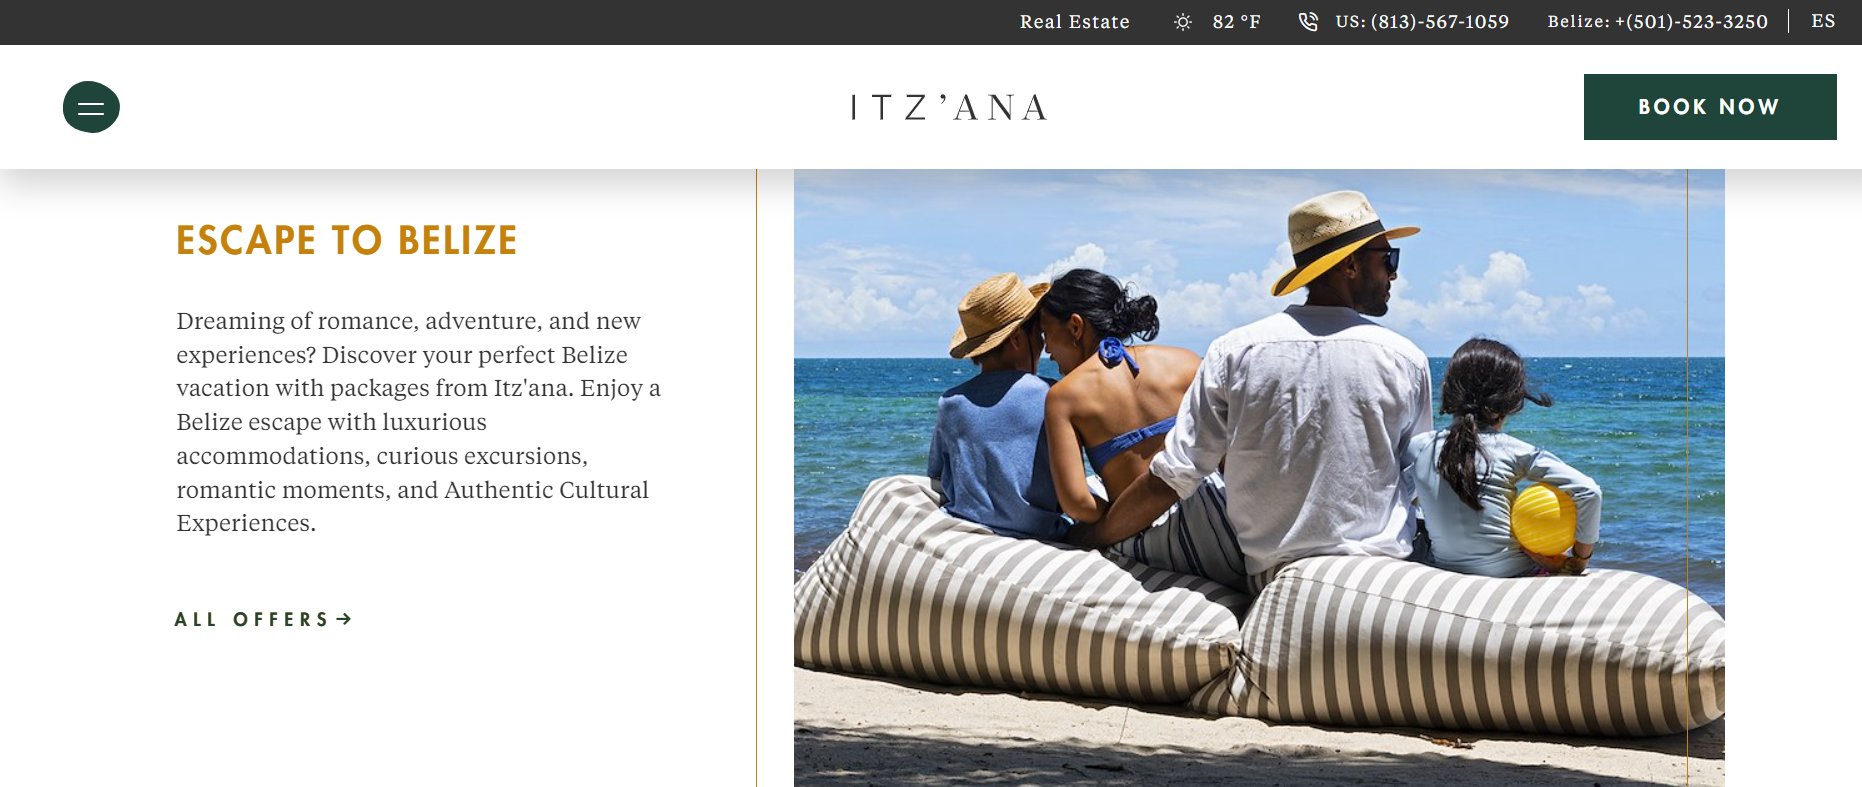 ITZ'ANA Website Luxury Real Estate Website.png